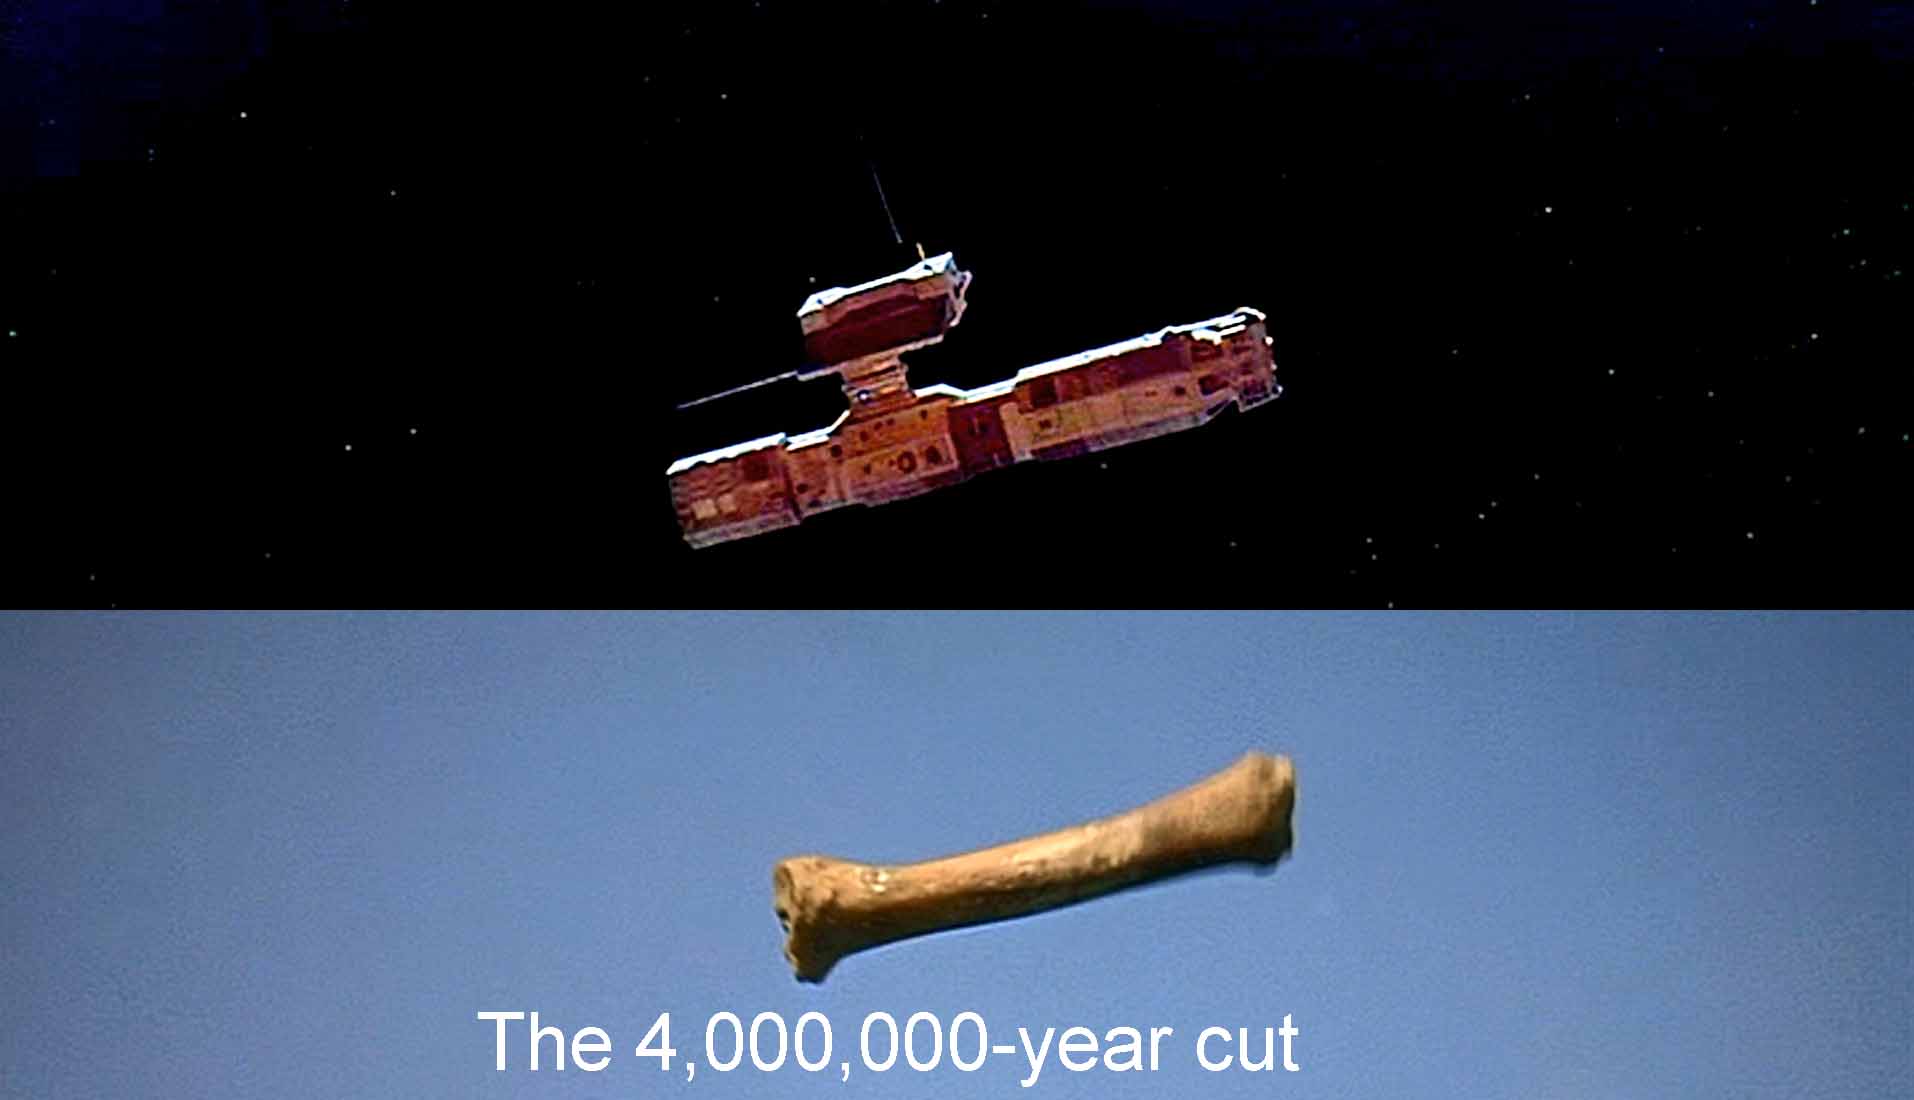 The 4,000,000-year cut